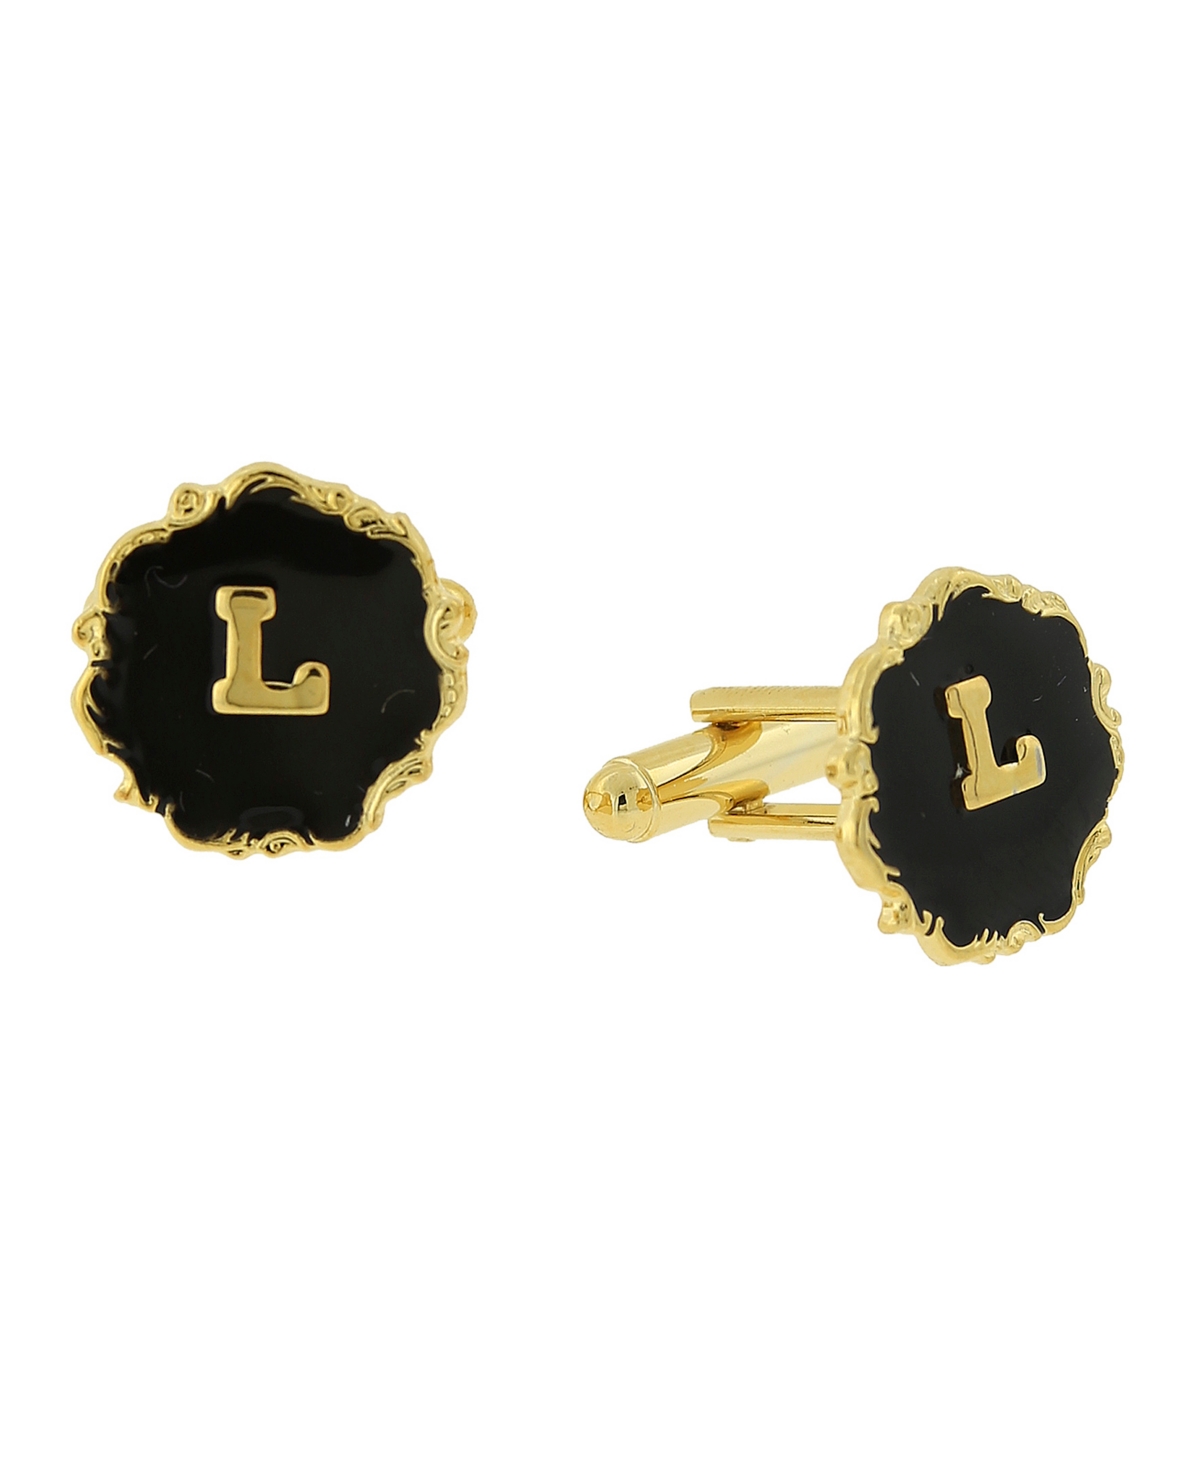 1928 Jewelry 14k Gold-plated Enamel Initial L Cufflinks In Black